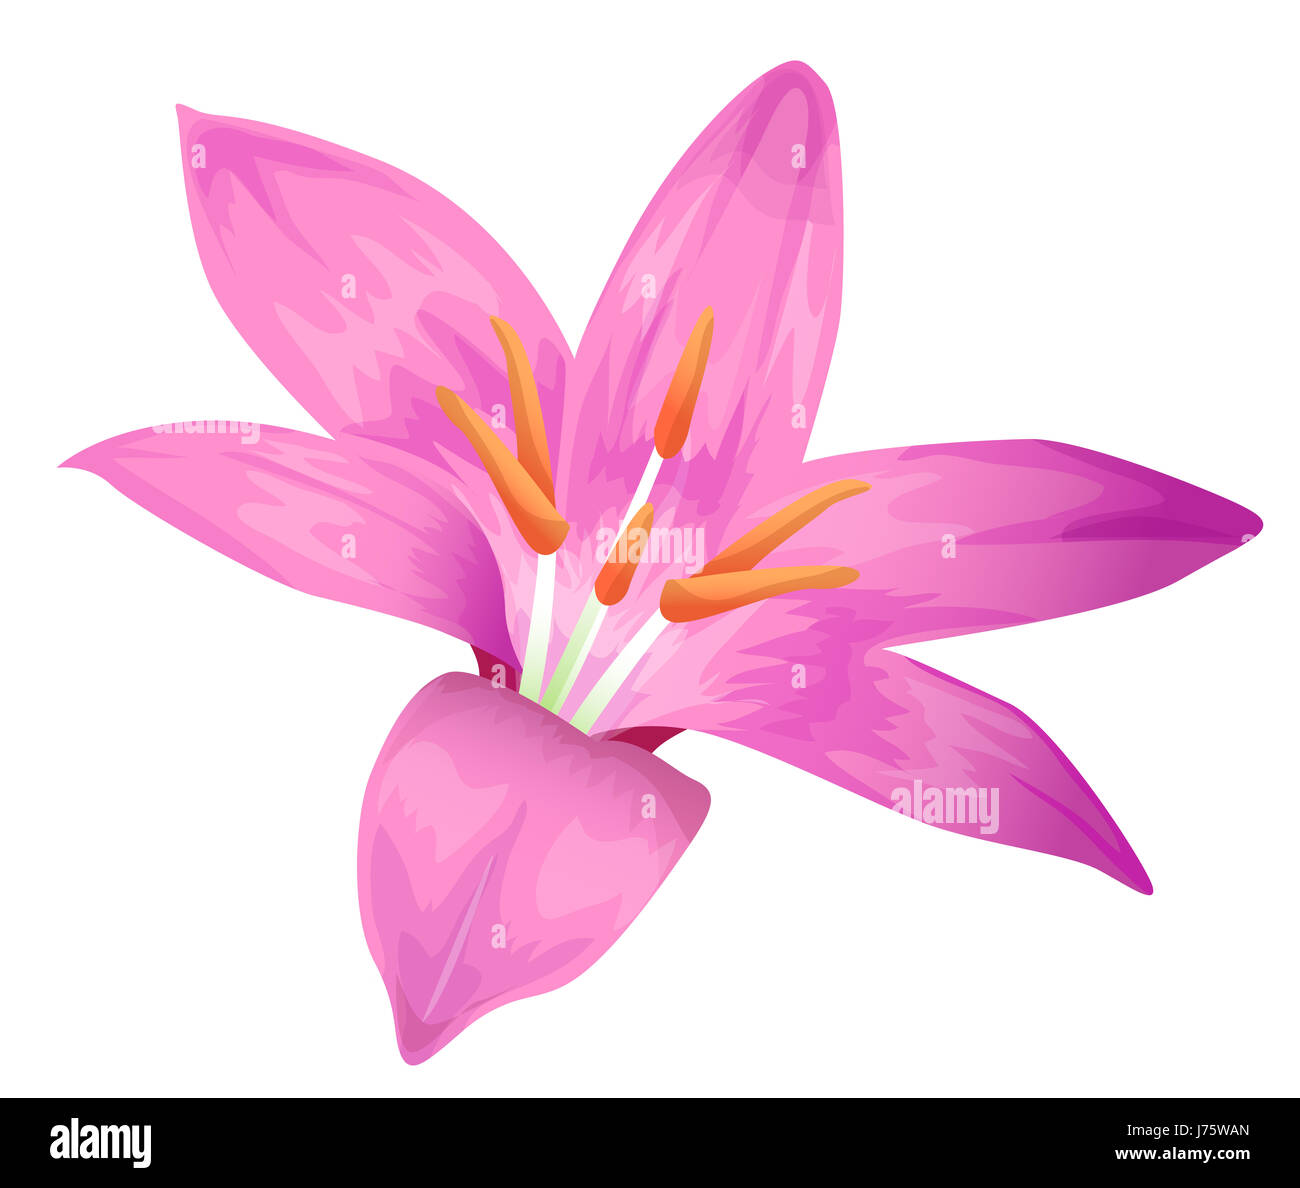 Dibujos animados de grandes flores moradas Imágenes recortadas de stock -  Alamy